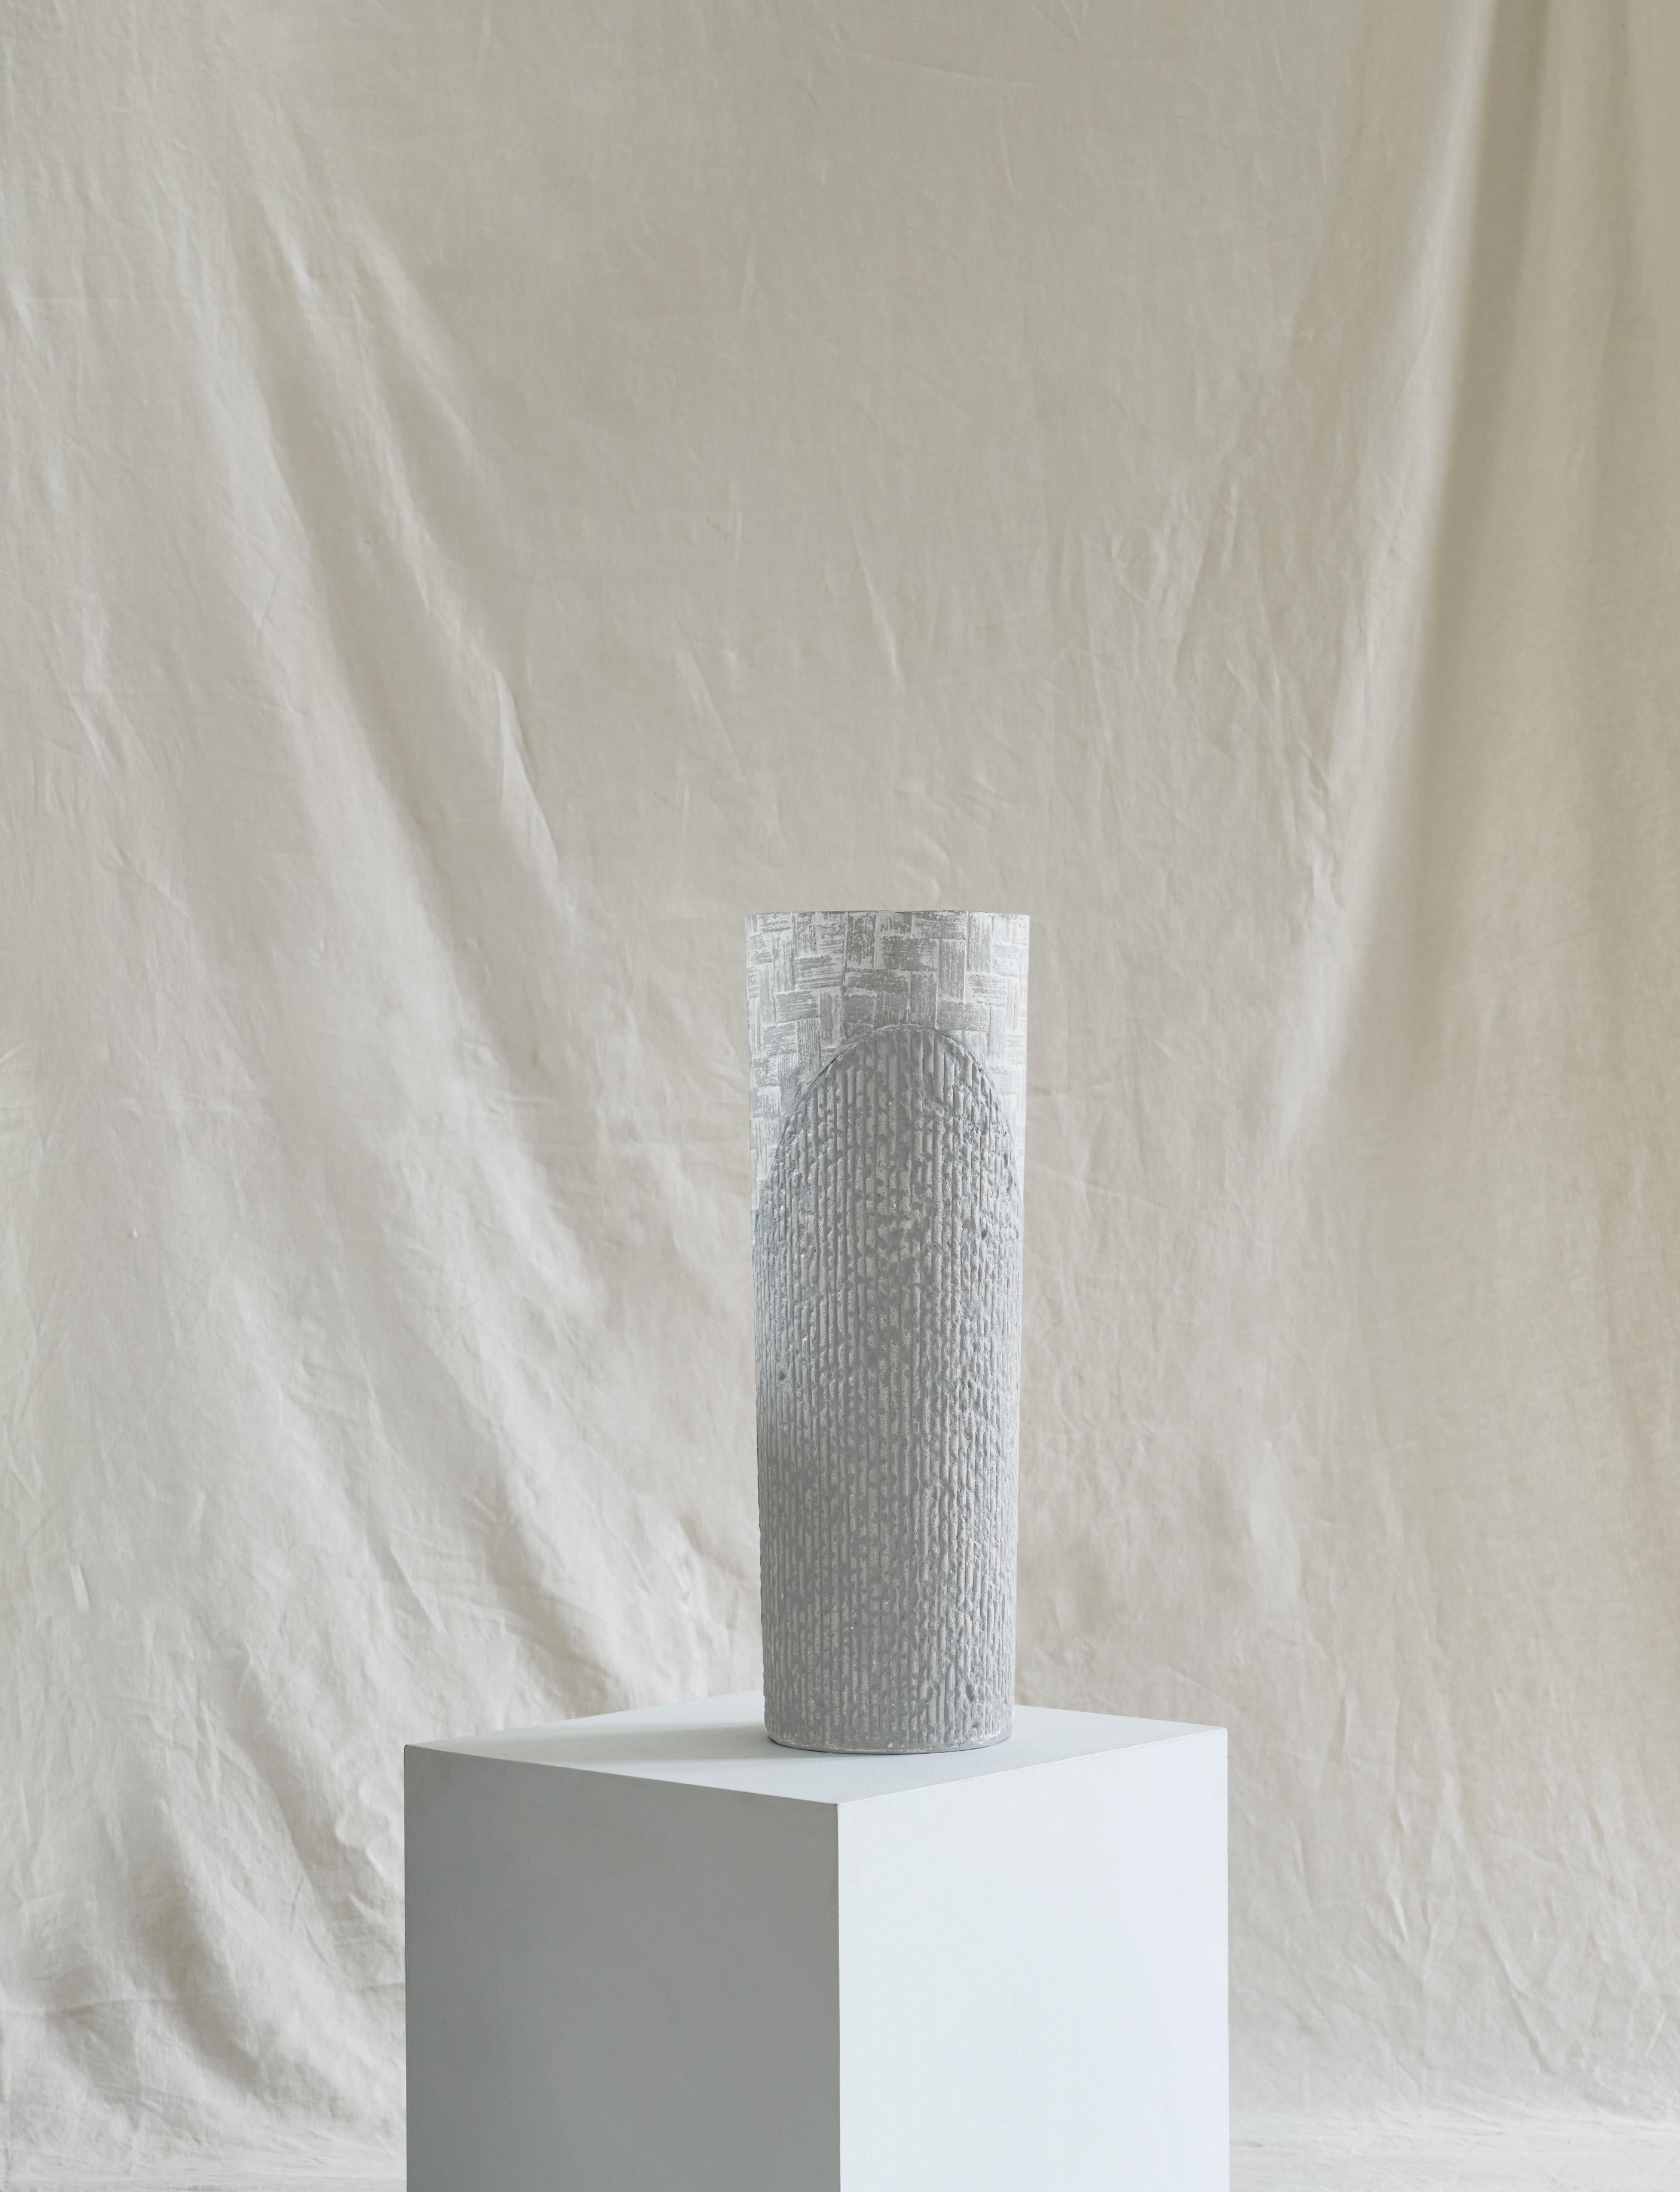 Cast Medium White & Gray Limestone & Paper Composite Vessel by Studio Laurence For Sale